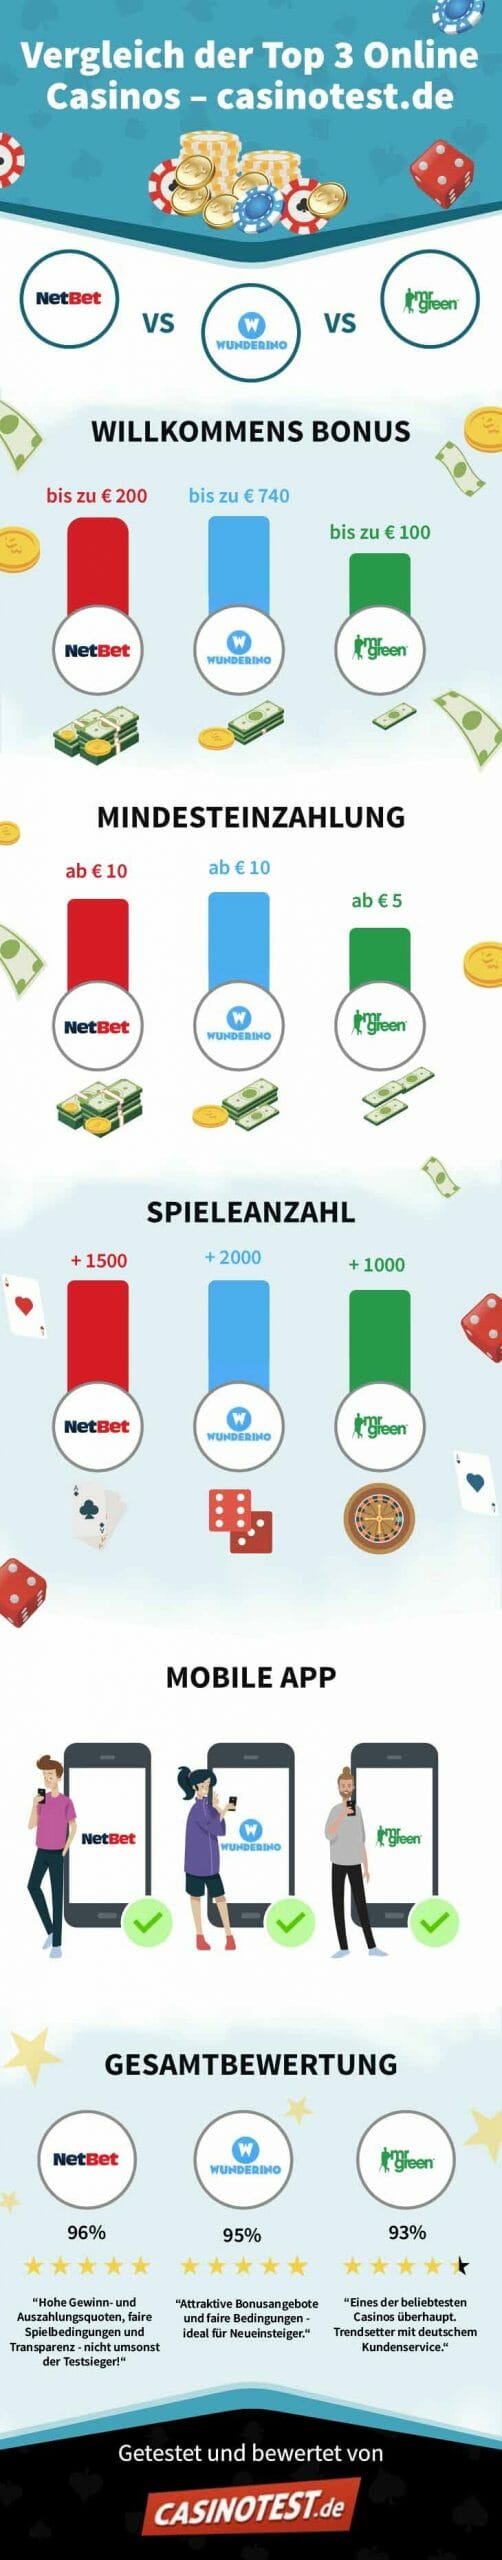 infografik-top-3-casinos-vergleich-scaled